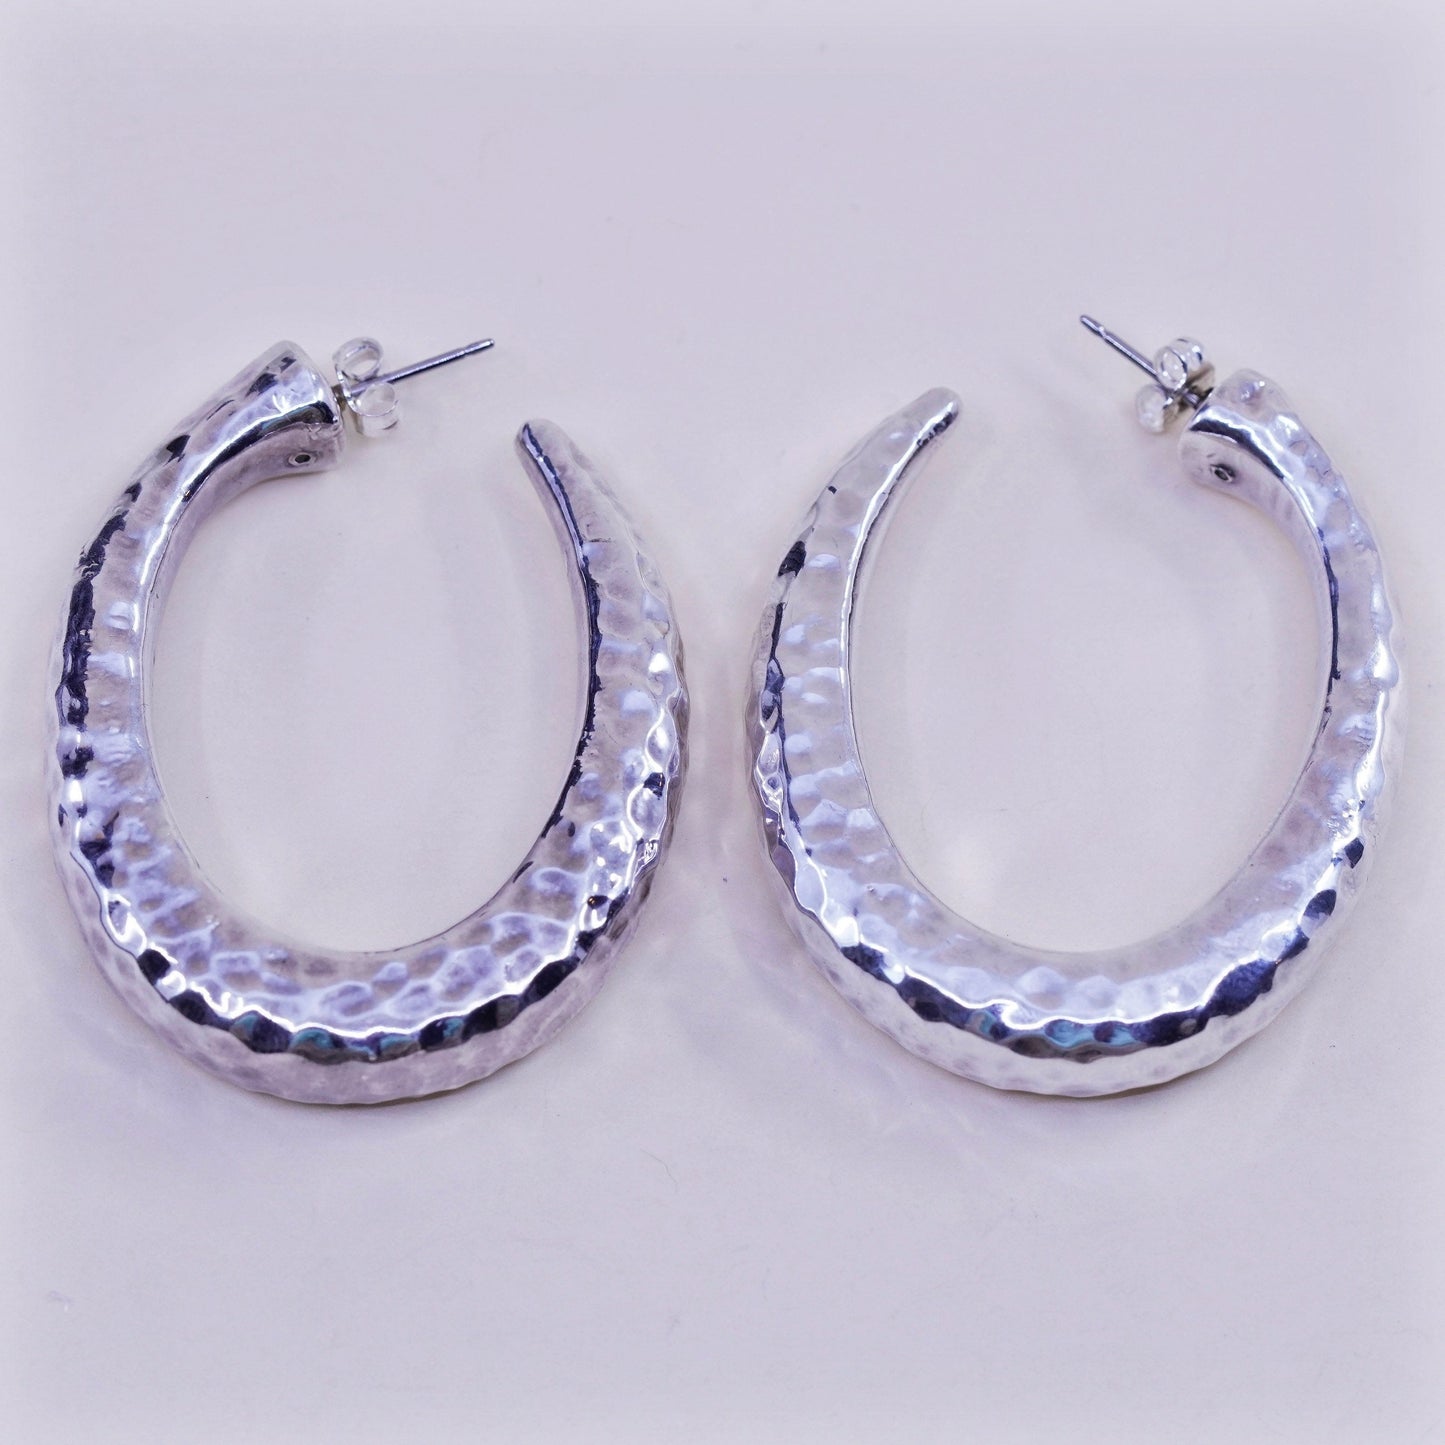 1.75” Vintage sterling 925 silver earrings, textured hammered primitive hoops